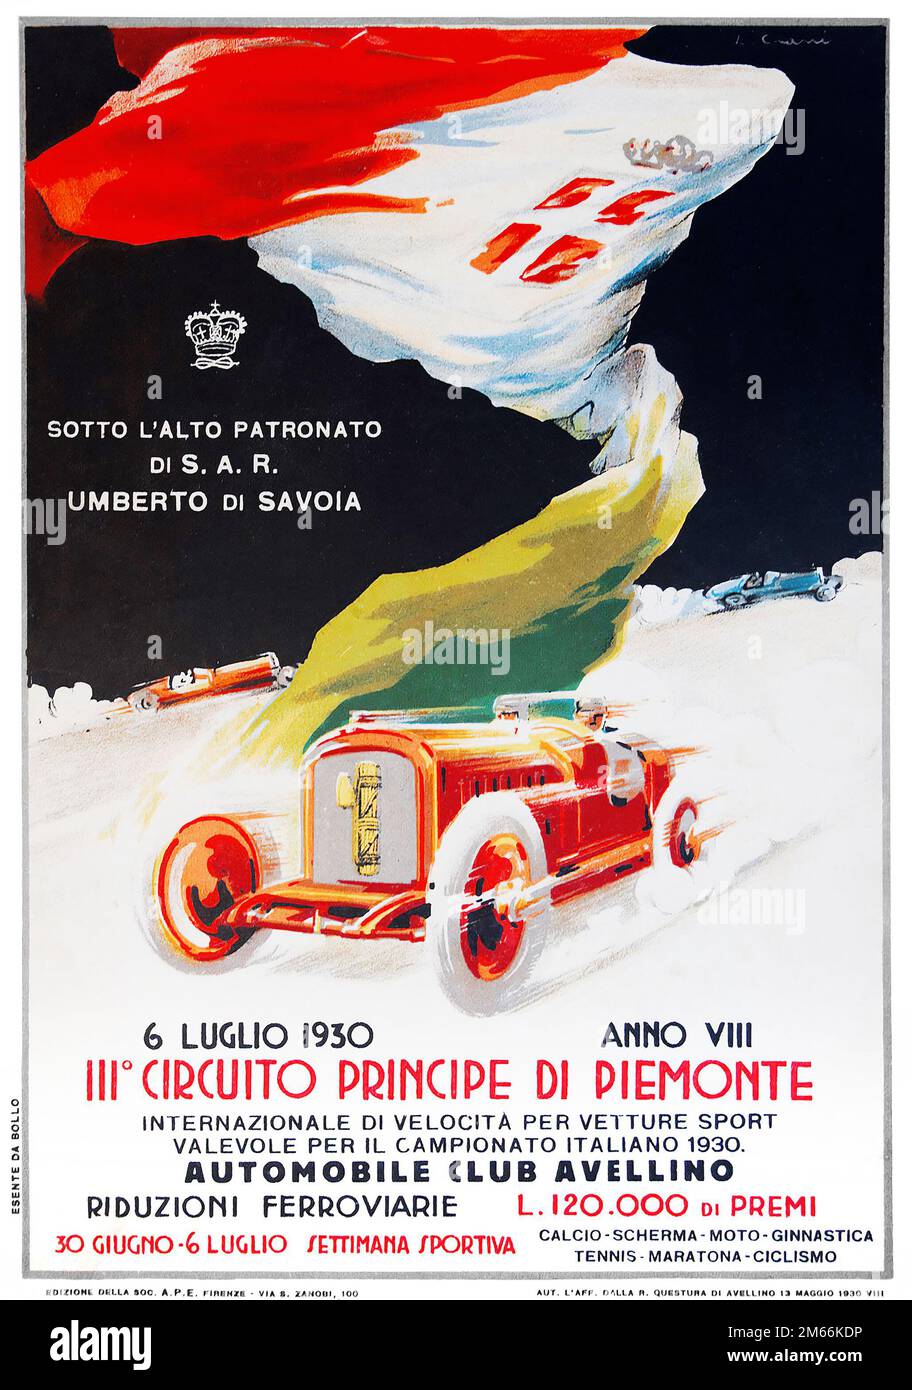 Vintage-1930er-Poster für Motorrennen Circuito Avellino. Renntag: 6. Juli 1930 Circuito Principe Di Piemonte Motorrennen - Oldtimer 1930er Poster Automobile - Club Avellino Italien Stockfoto